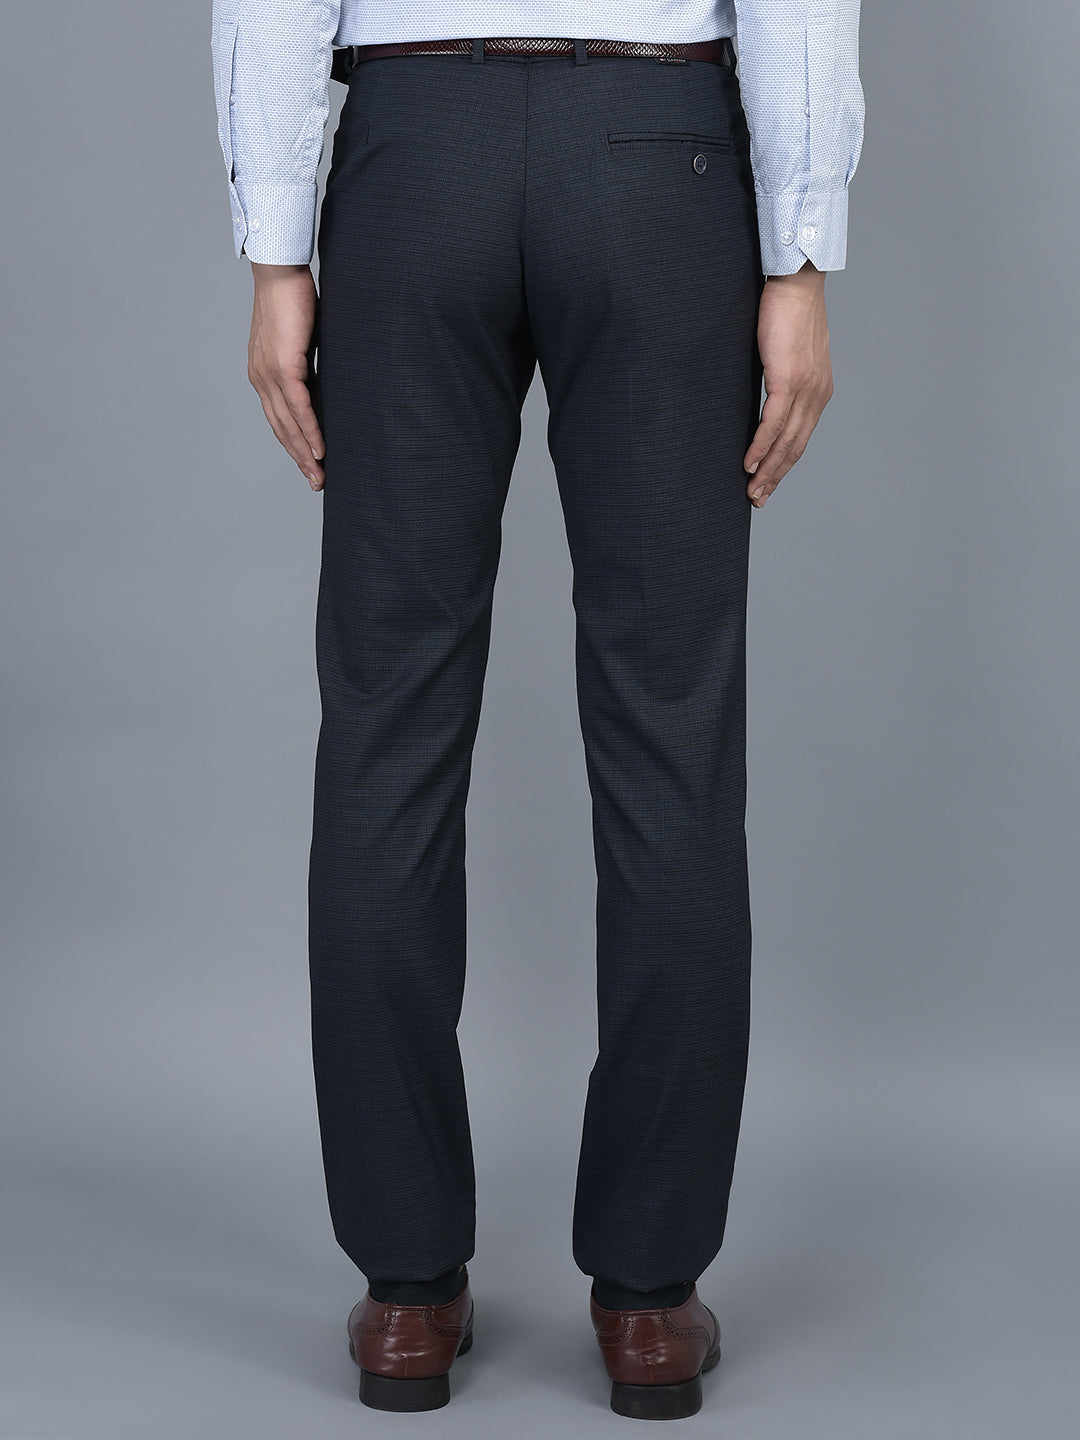 Buy Charcoal Black Trousers  Pants for Men by JOHN PLAYERS Online   Ajiocom